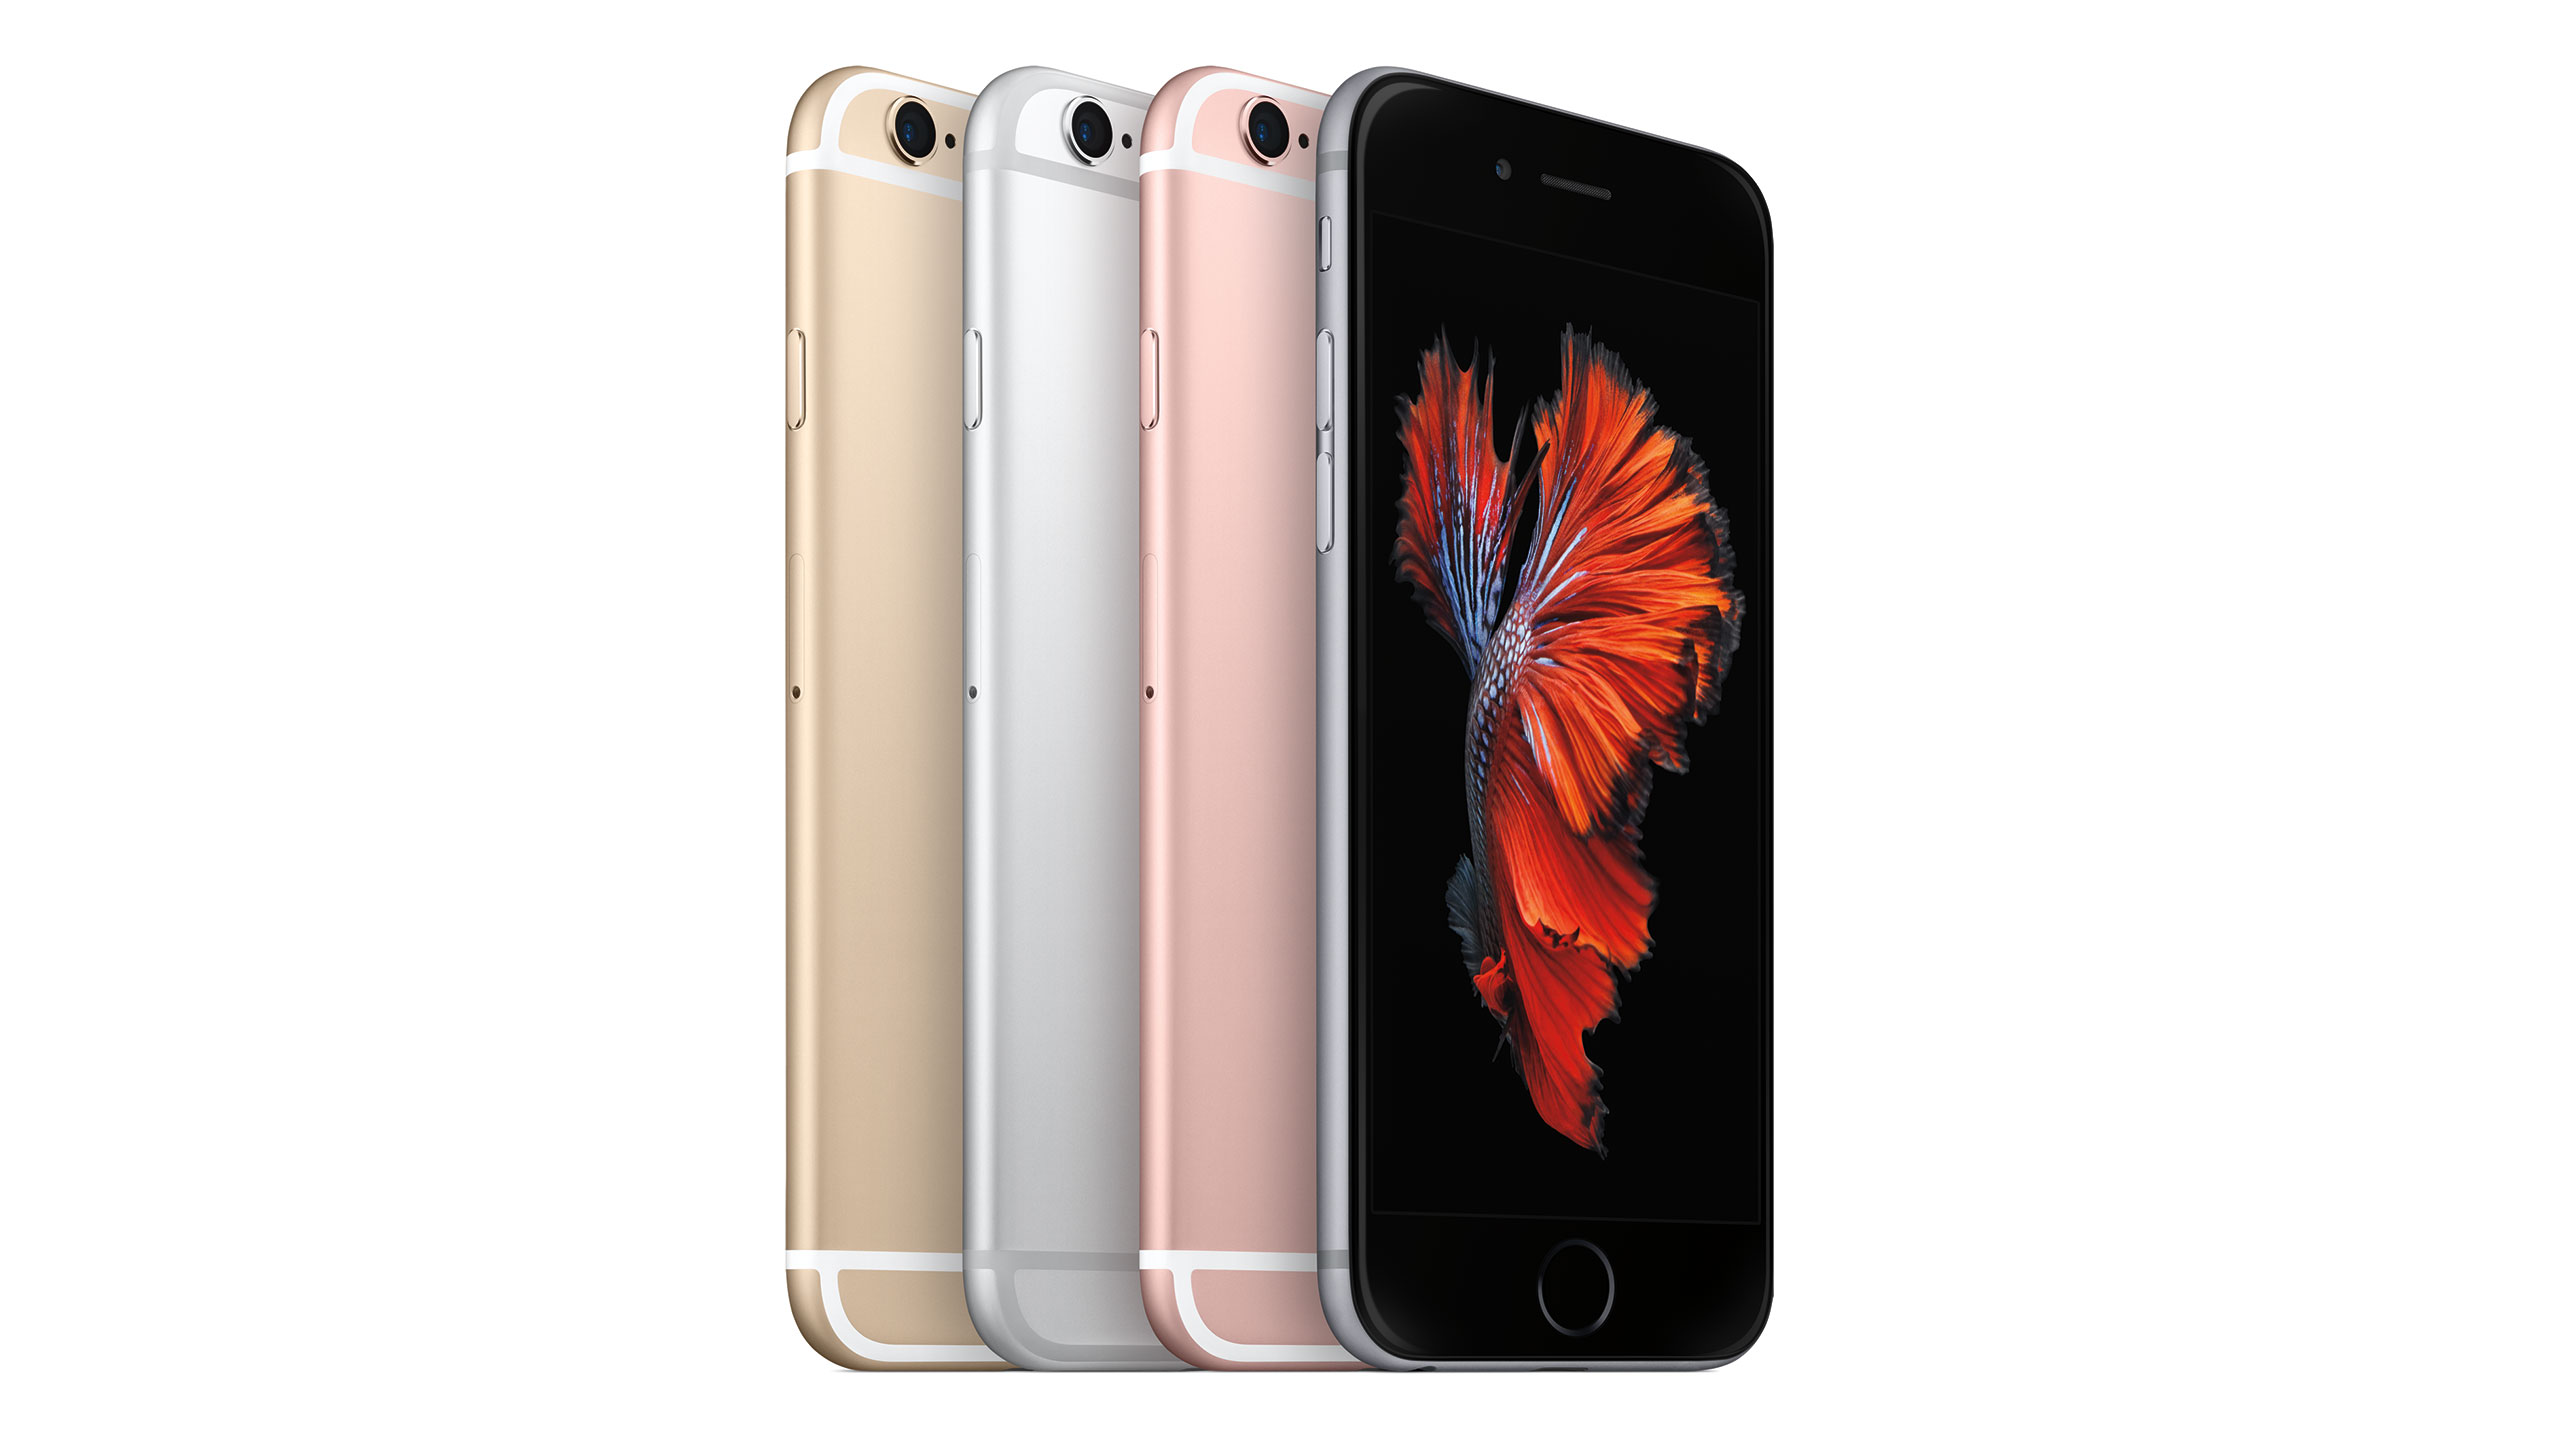 Apple iPhone 6s Plus 16GB Unlocked GSM 4G LTE 12MP Phone (Certified Refurbished)